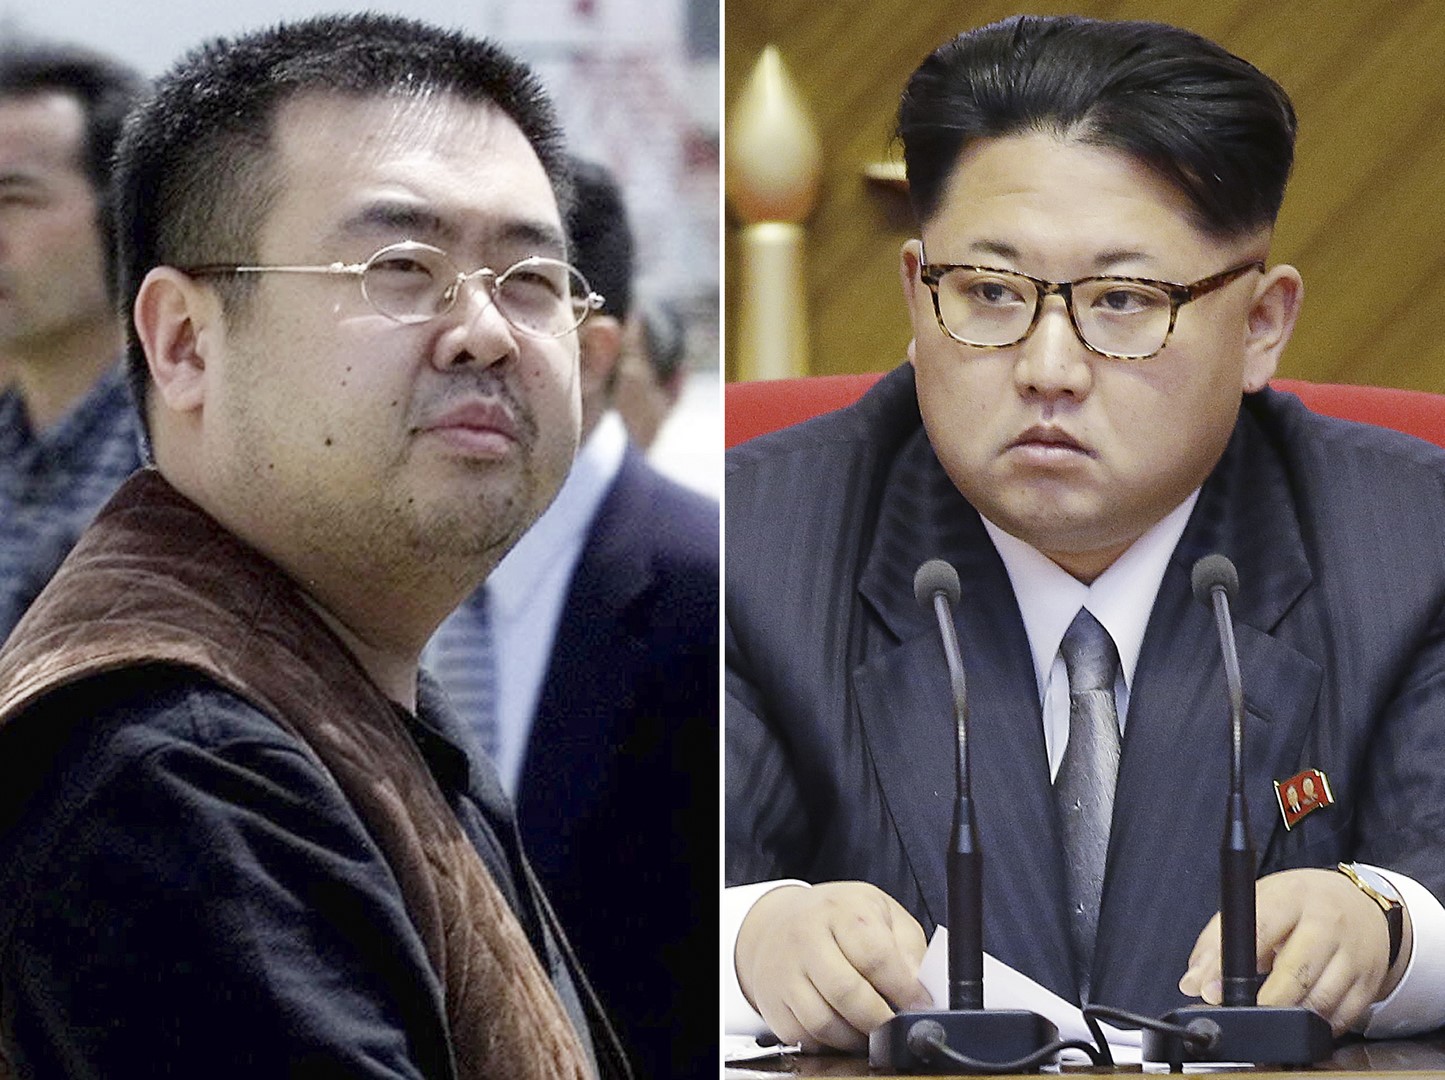 Confirma la muerte de Kim Jong-nam, hermano mayor del líder norcoreano, Kim Jong-un, ocurrida en Kuala Lumpur. (AP)